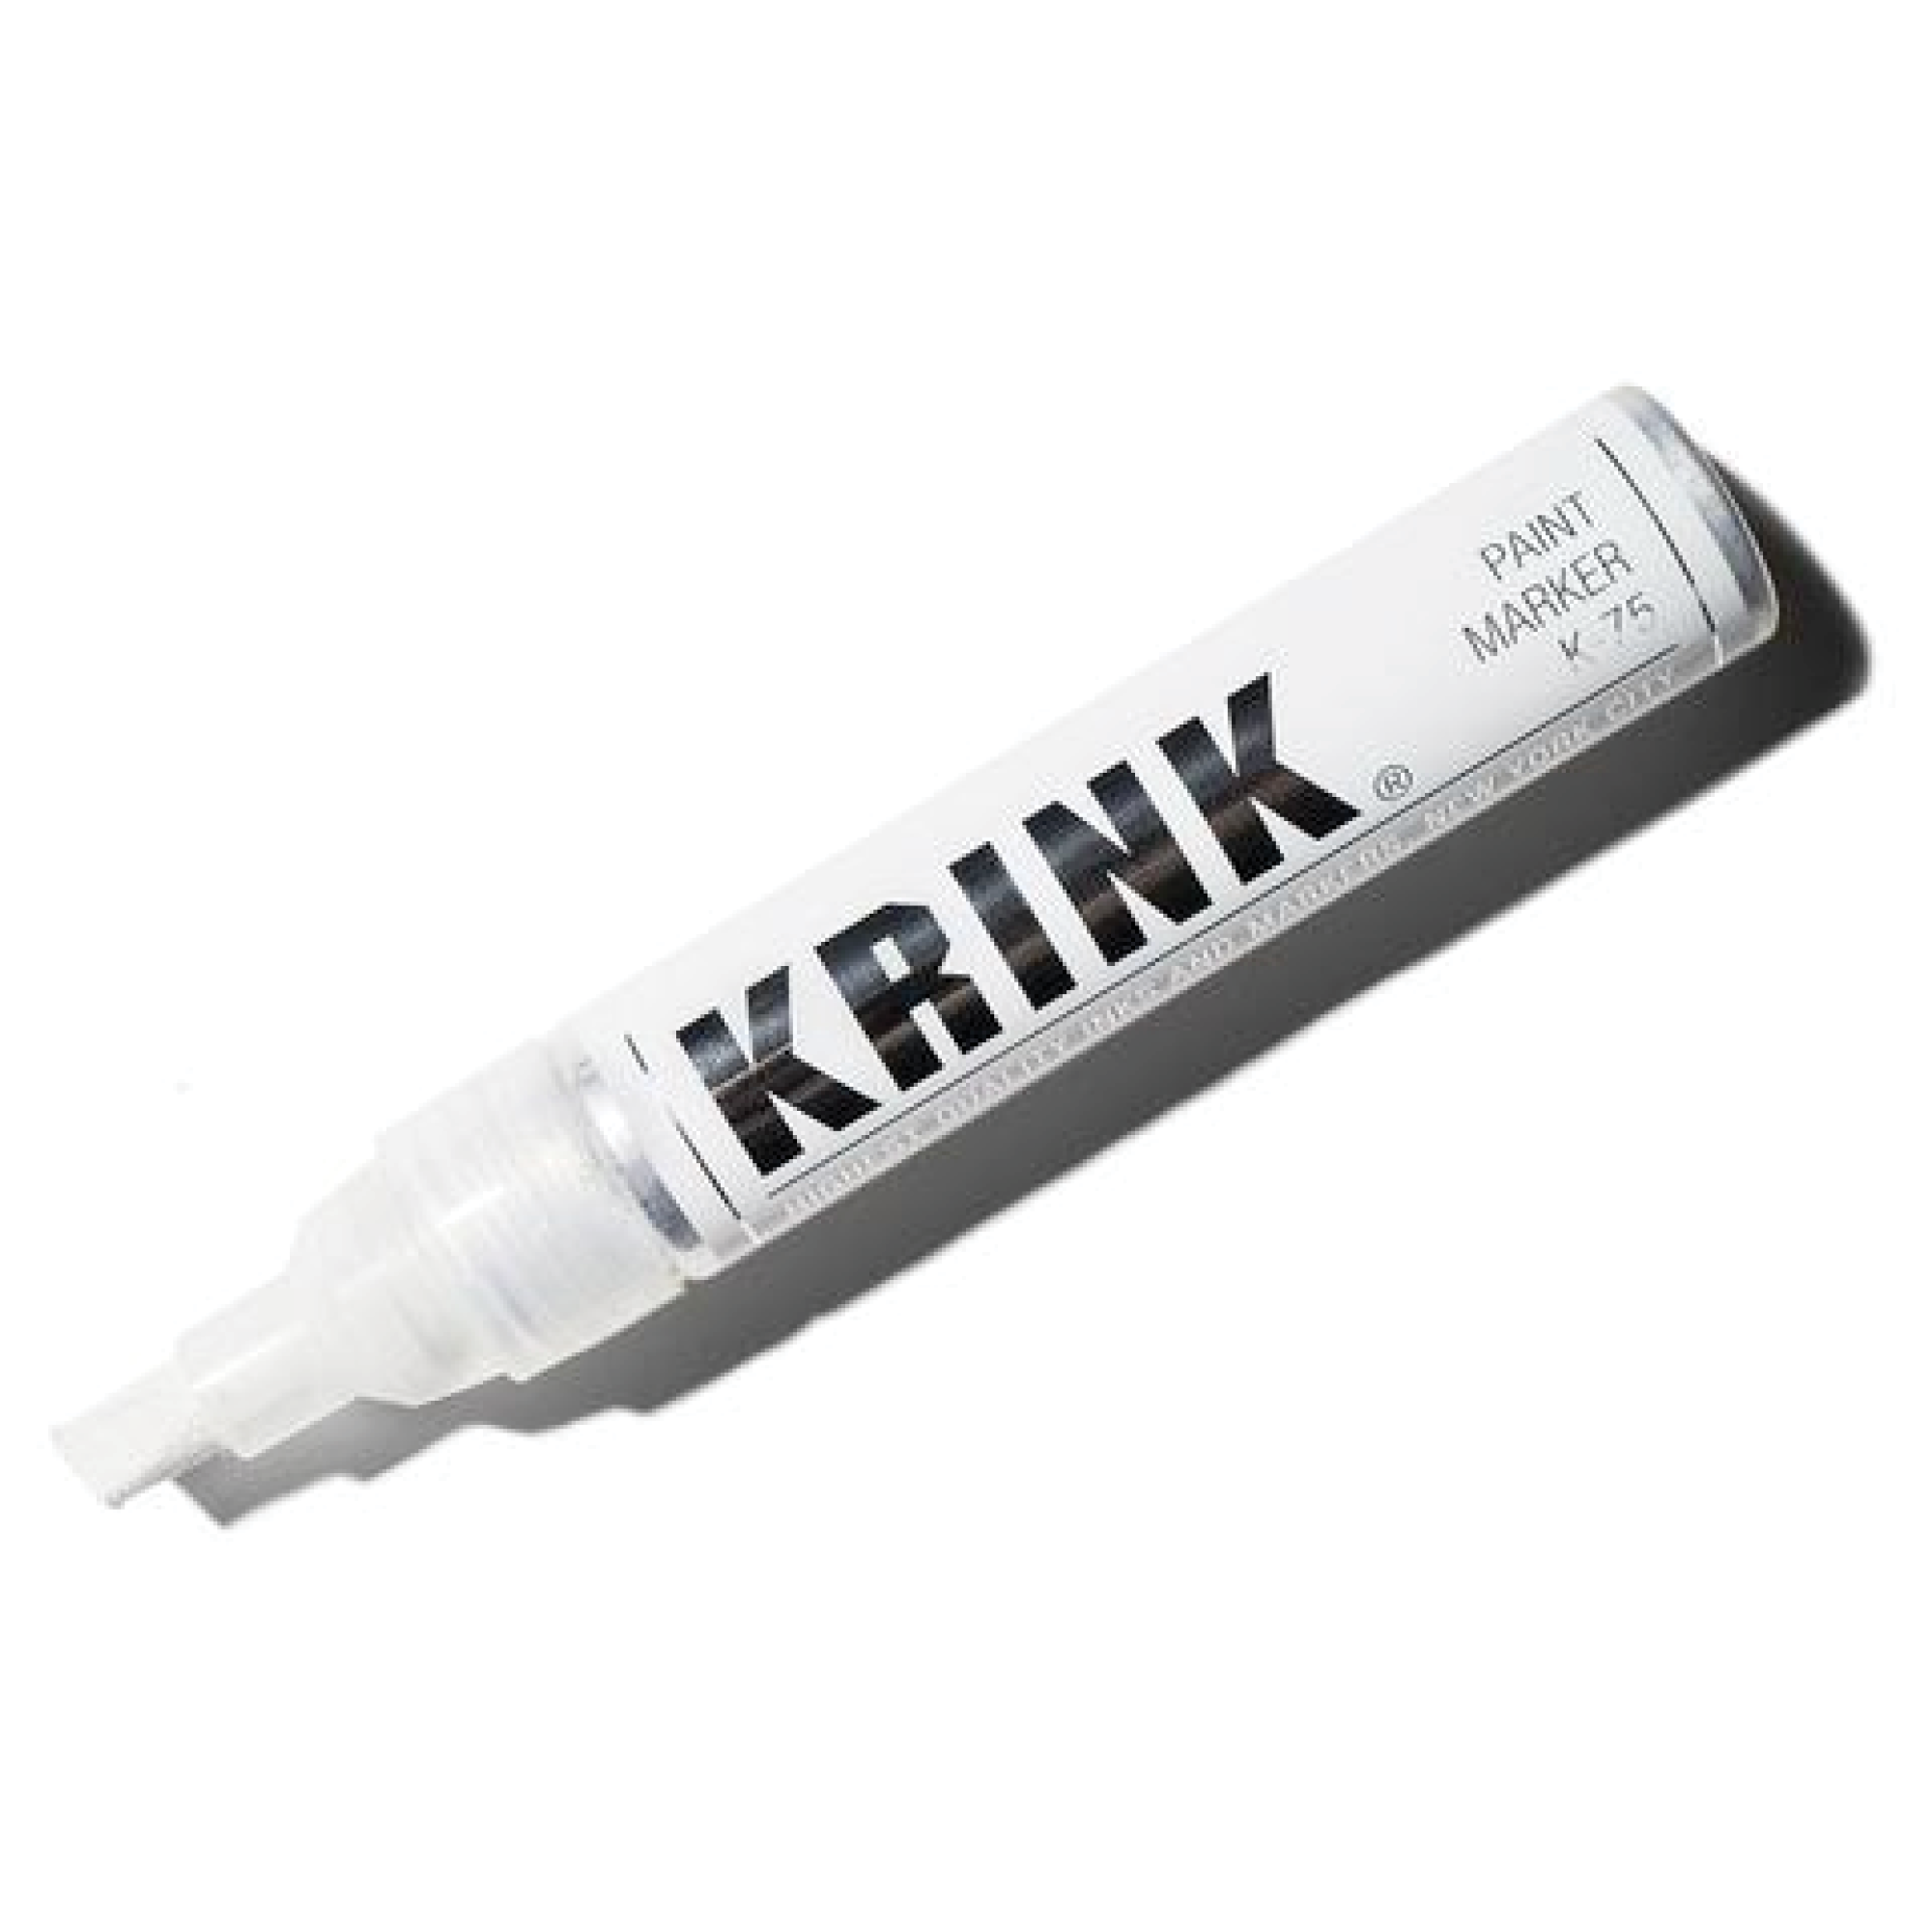 KRINK K-75 Paint Marker | Spray Planet